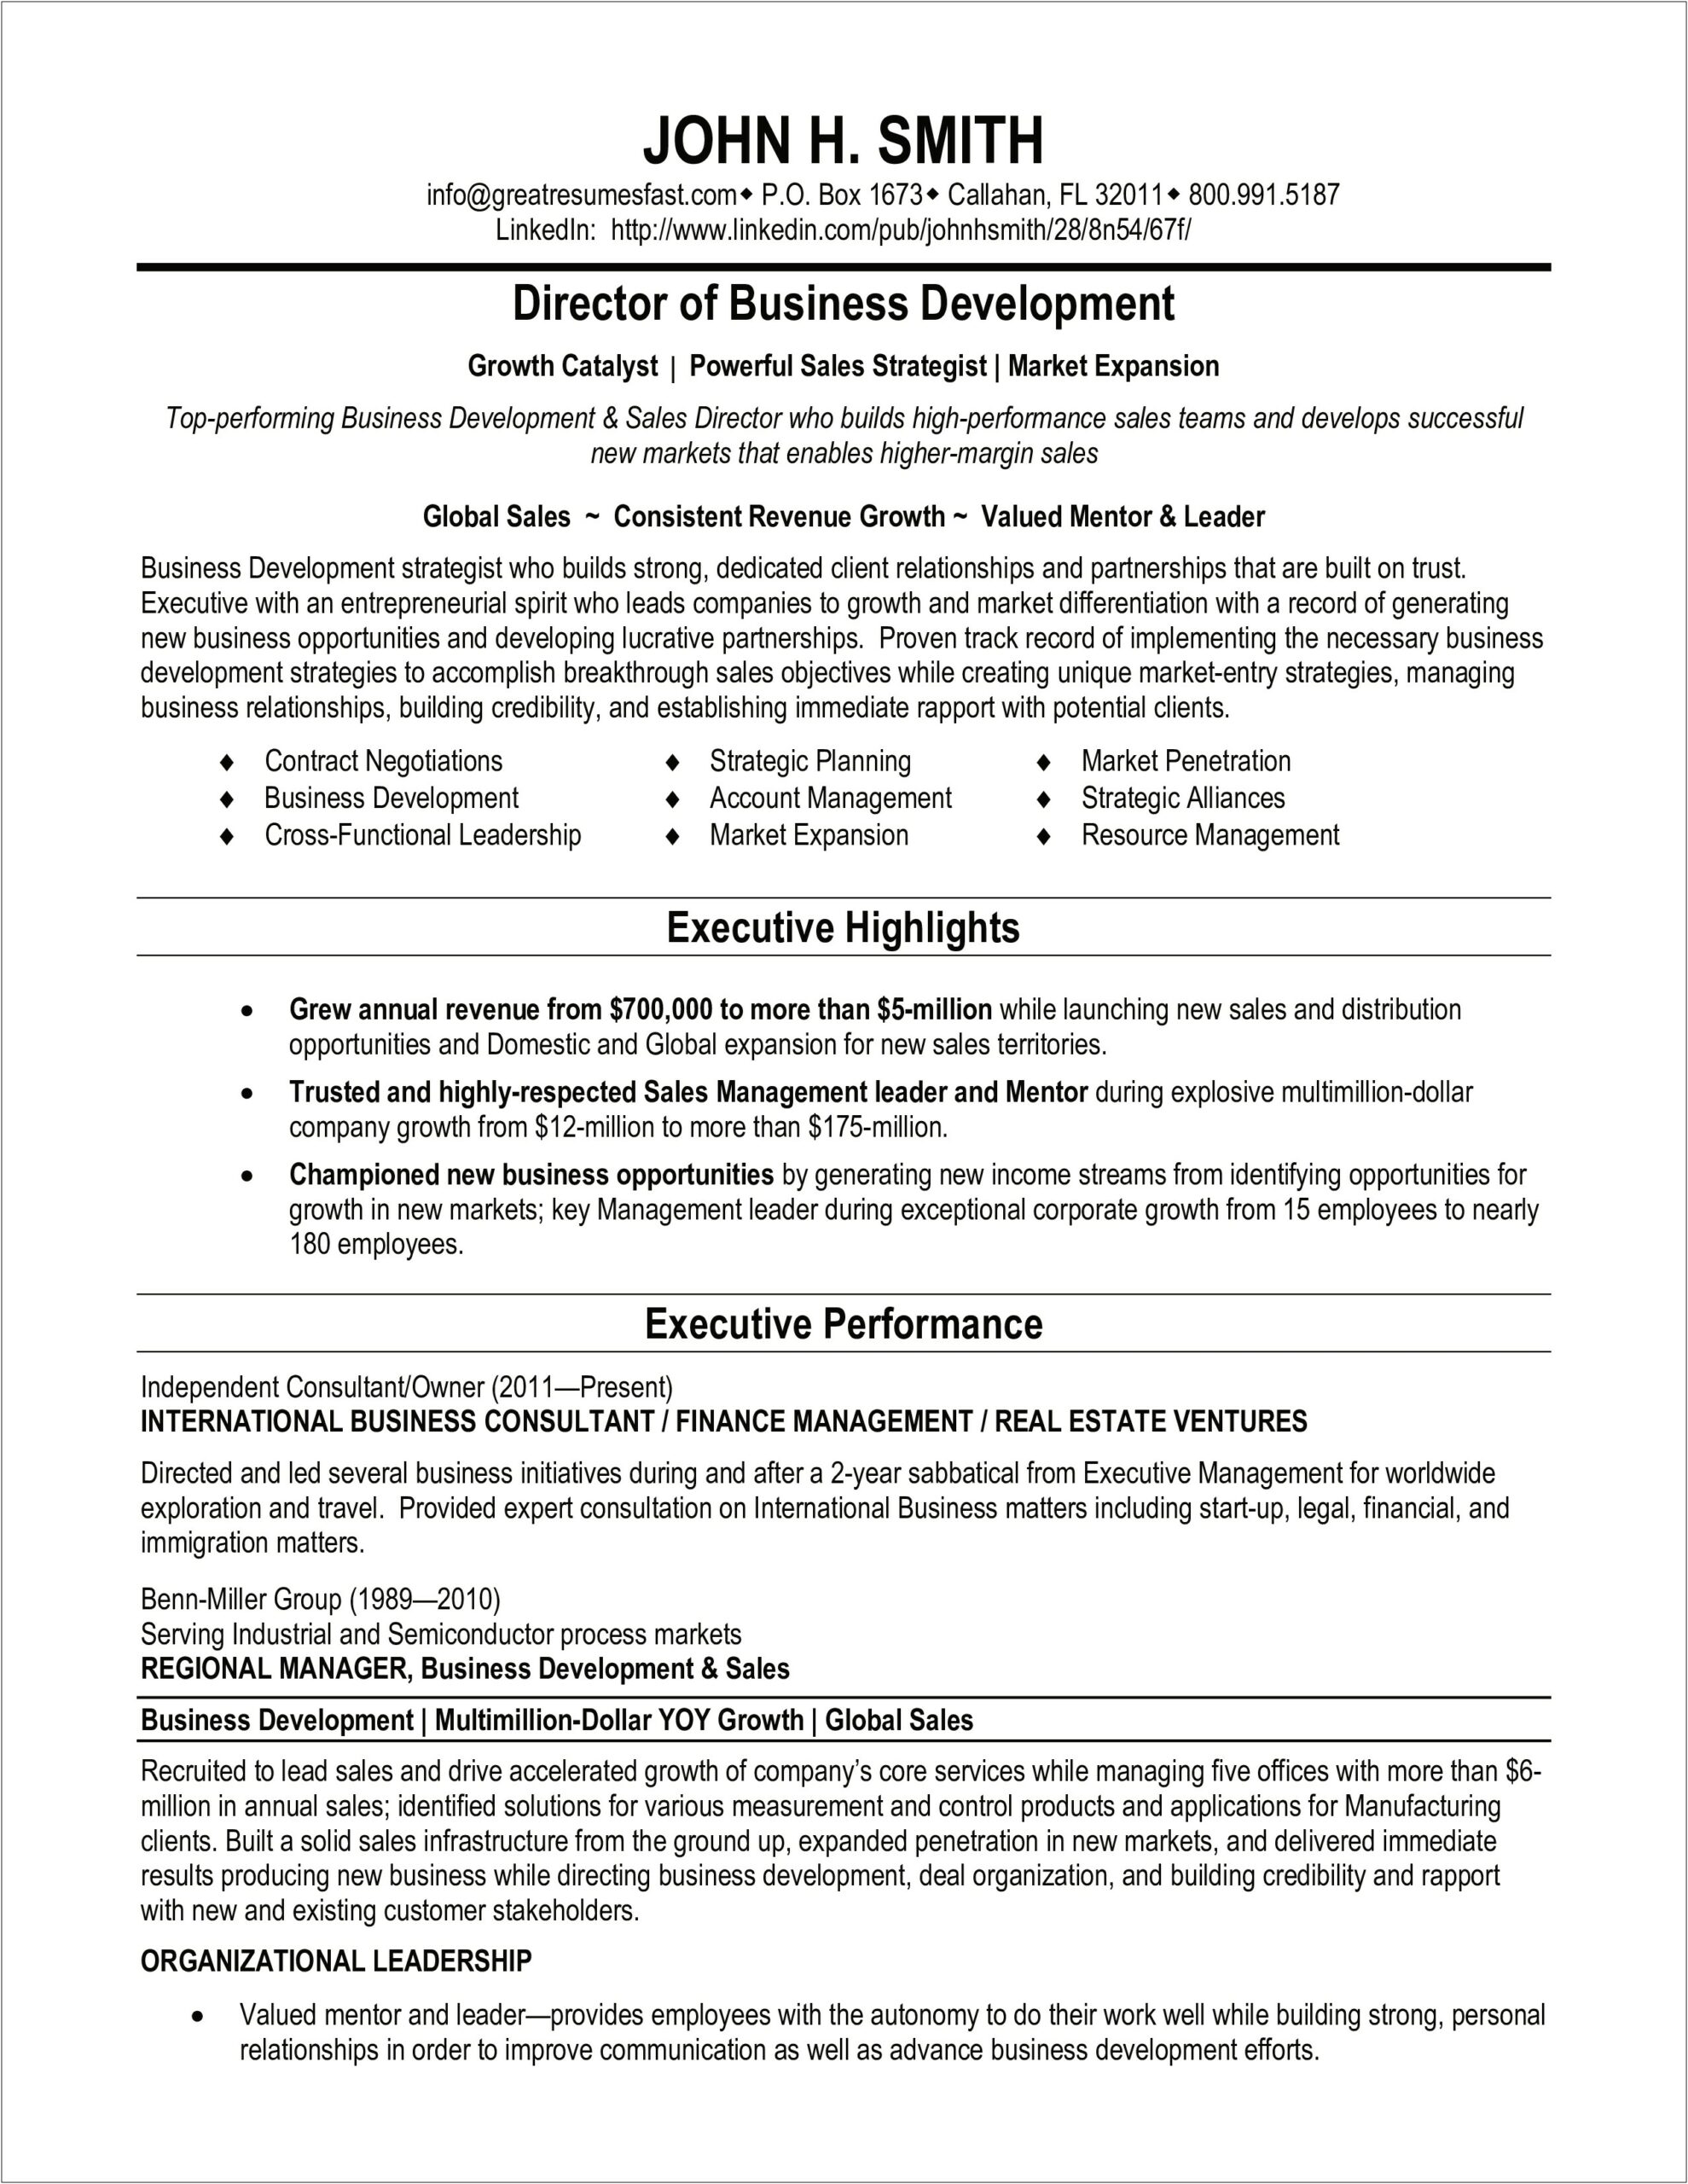 Job Description For Sales Consultant For Resume